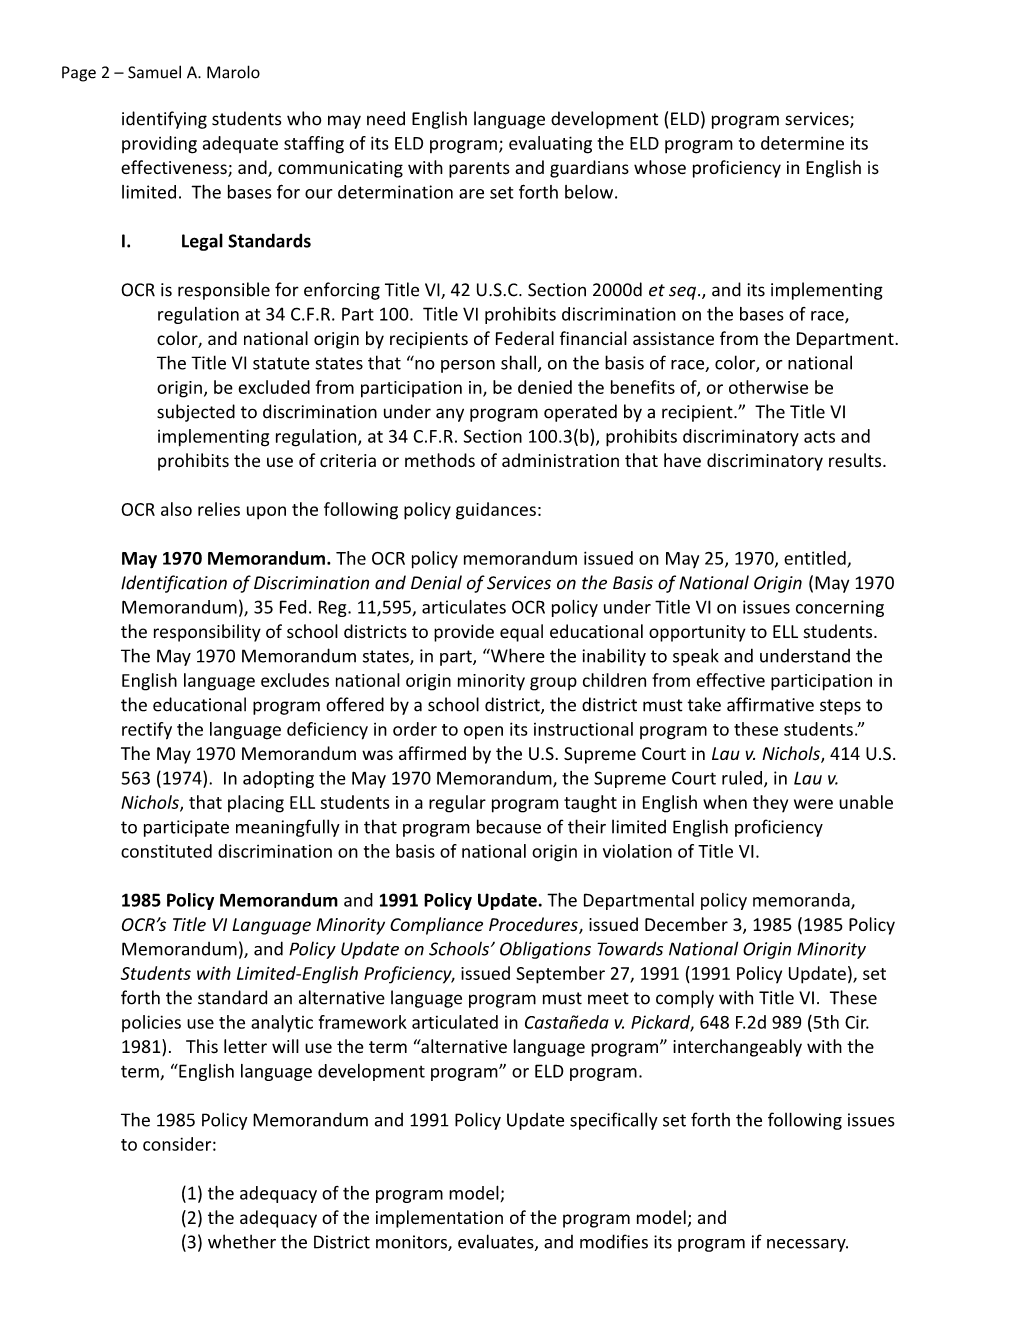 Resolution Letter: Hazleton Area School District, Pennsylvania: Compliance Review #03-10-5002